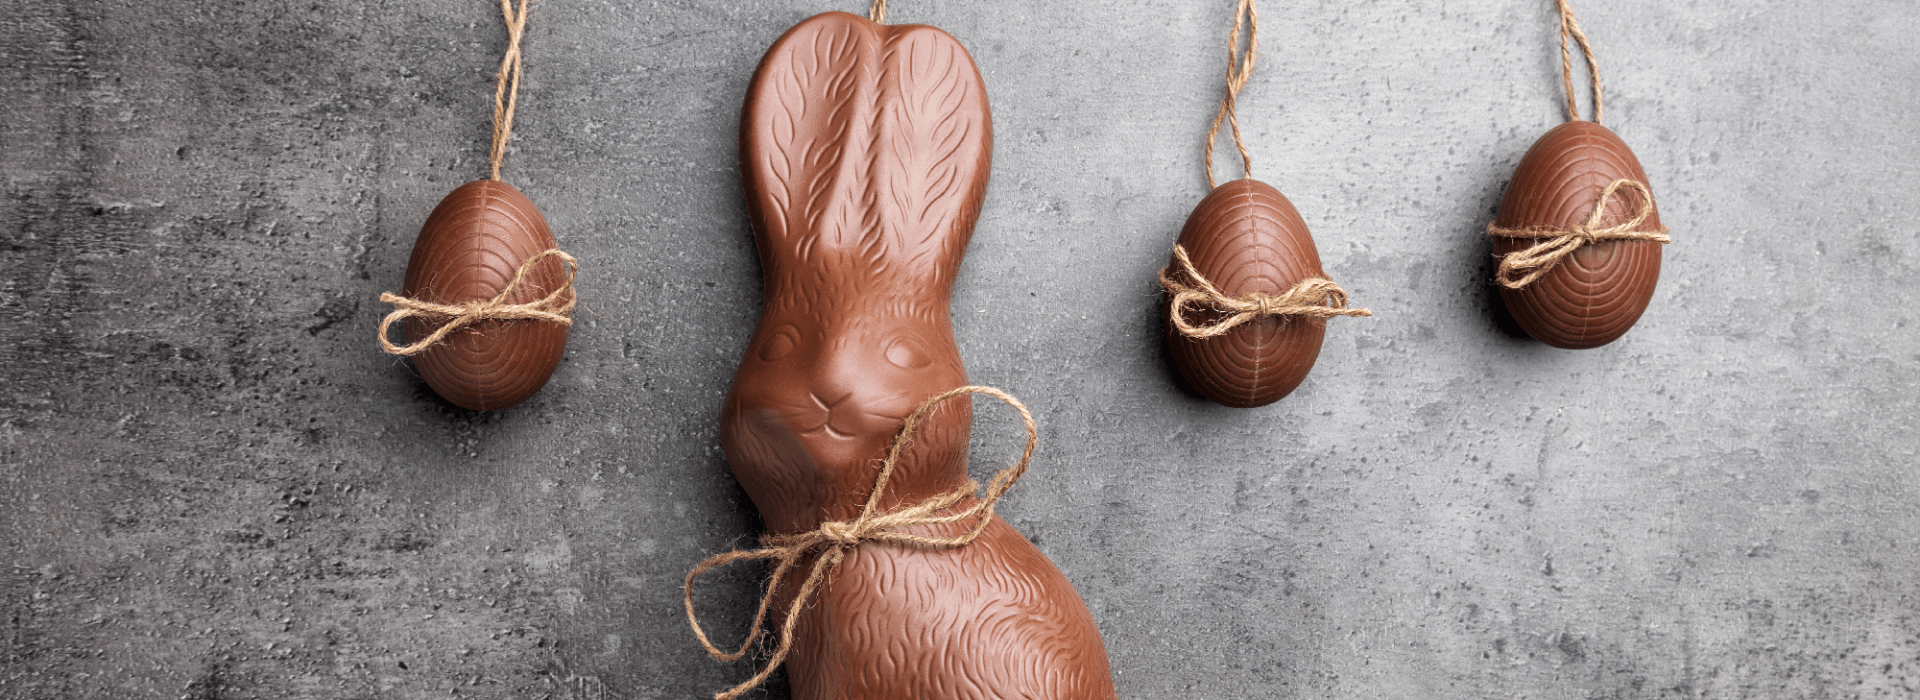 chocolate eggs easter bunnies